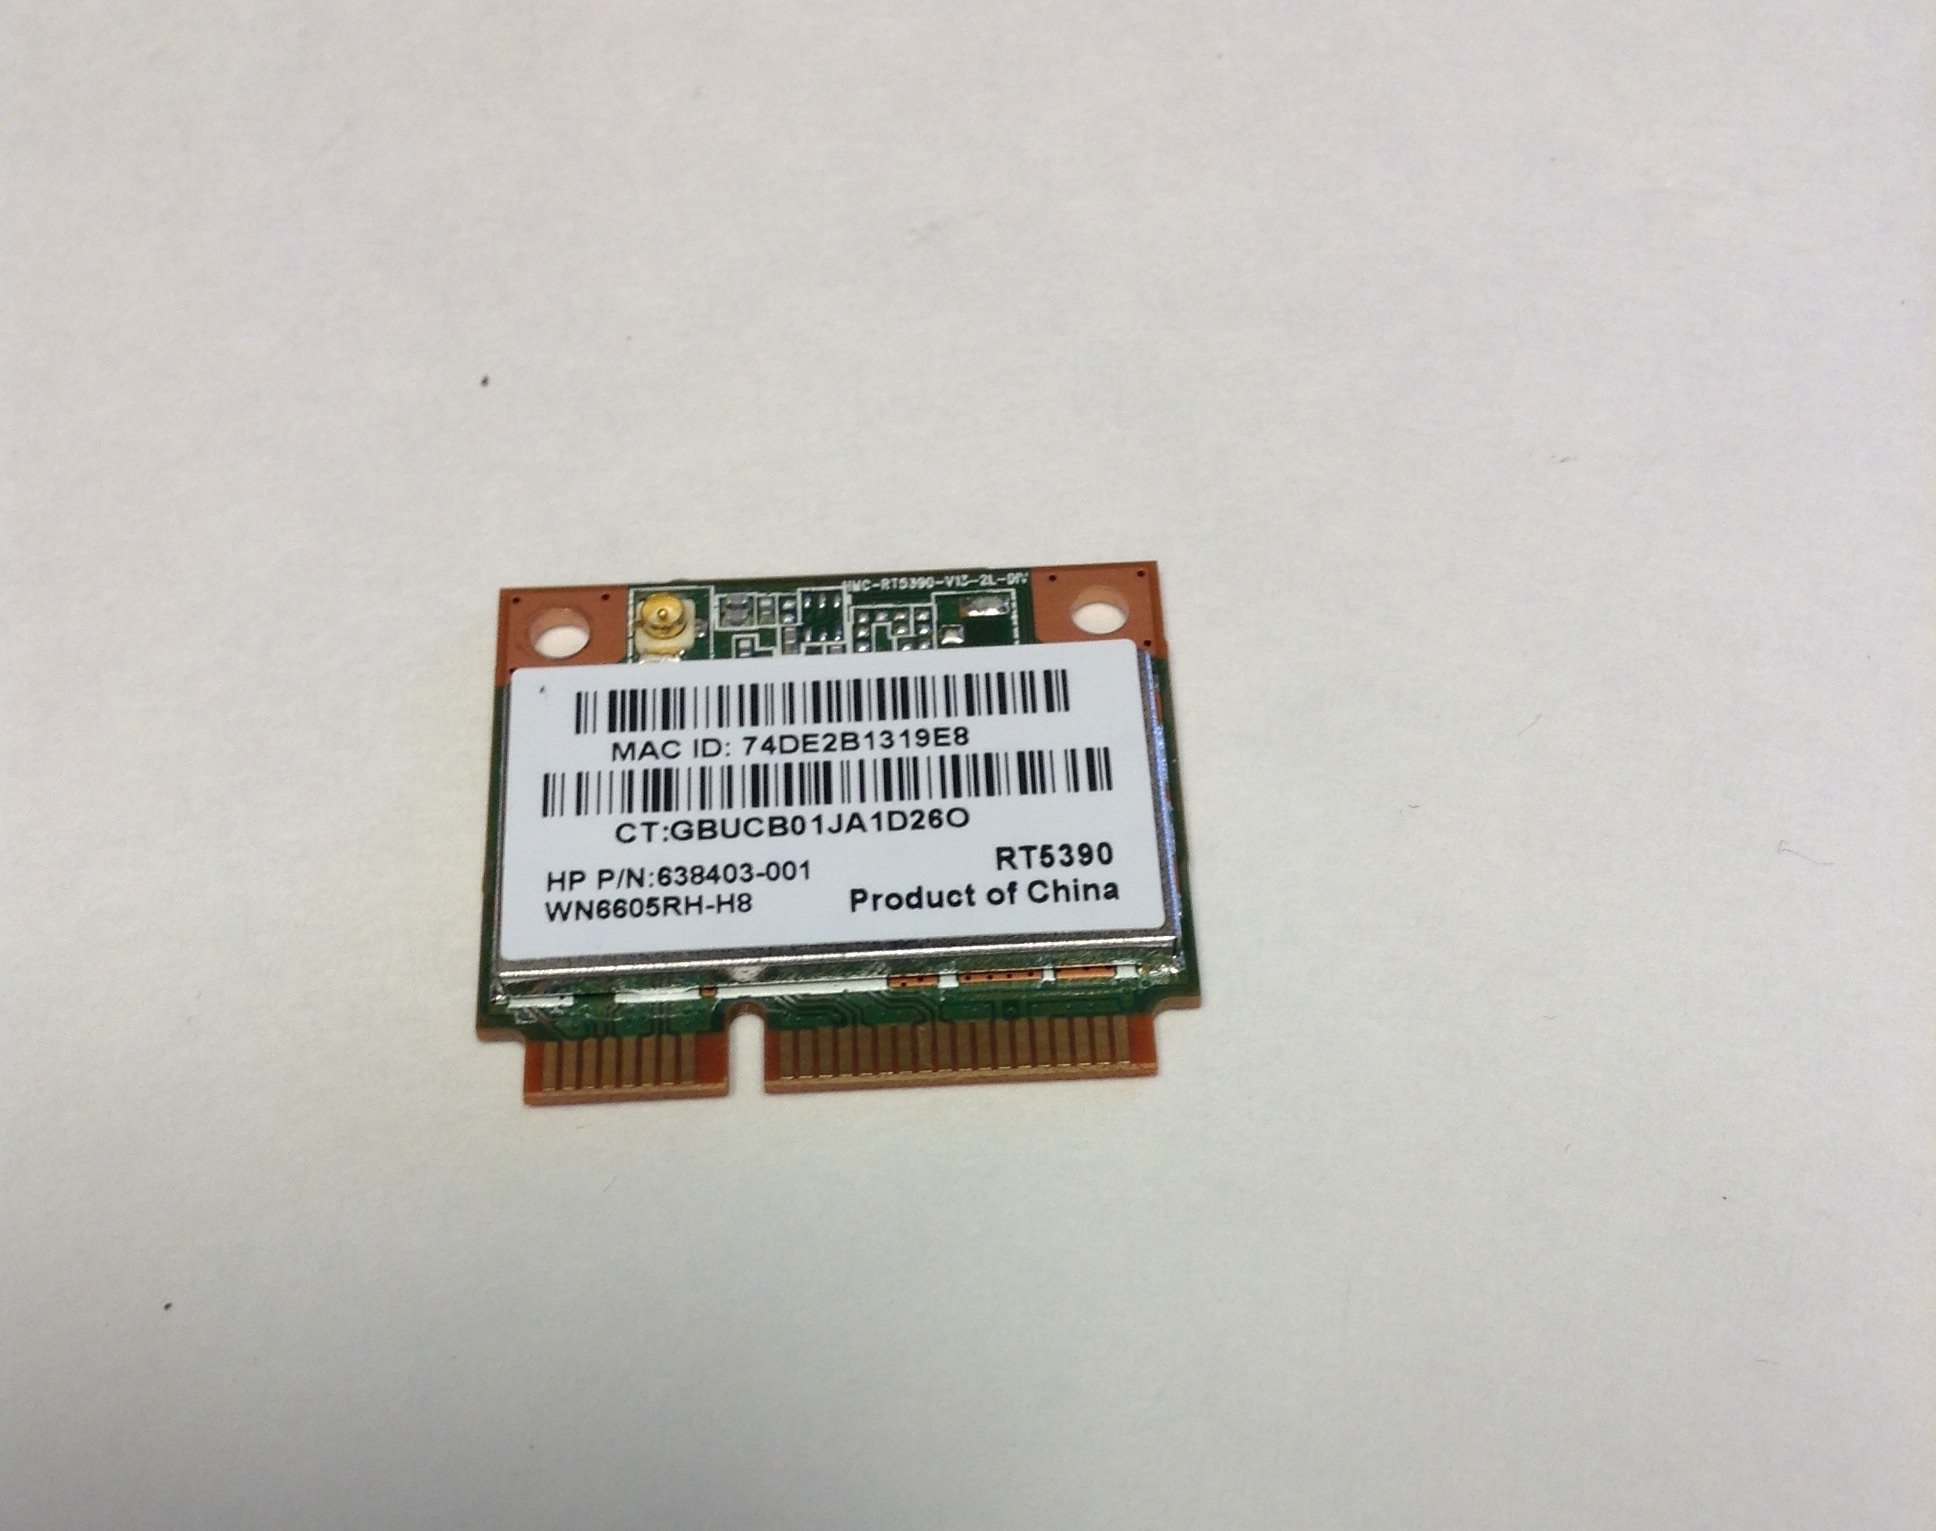 HP Mini Wi-Fi PCIe RT5390 802.11bgn 1x1 638403-001 WN6605RH V01 WLAN Card